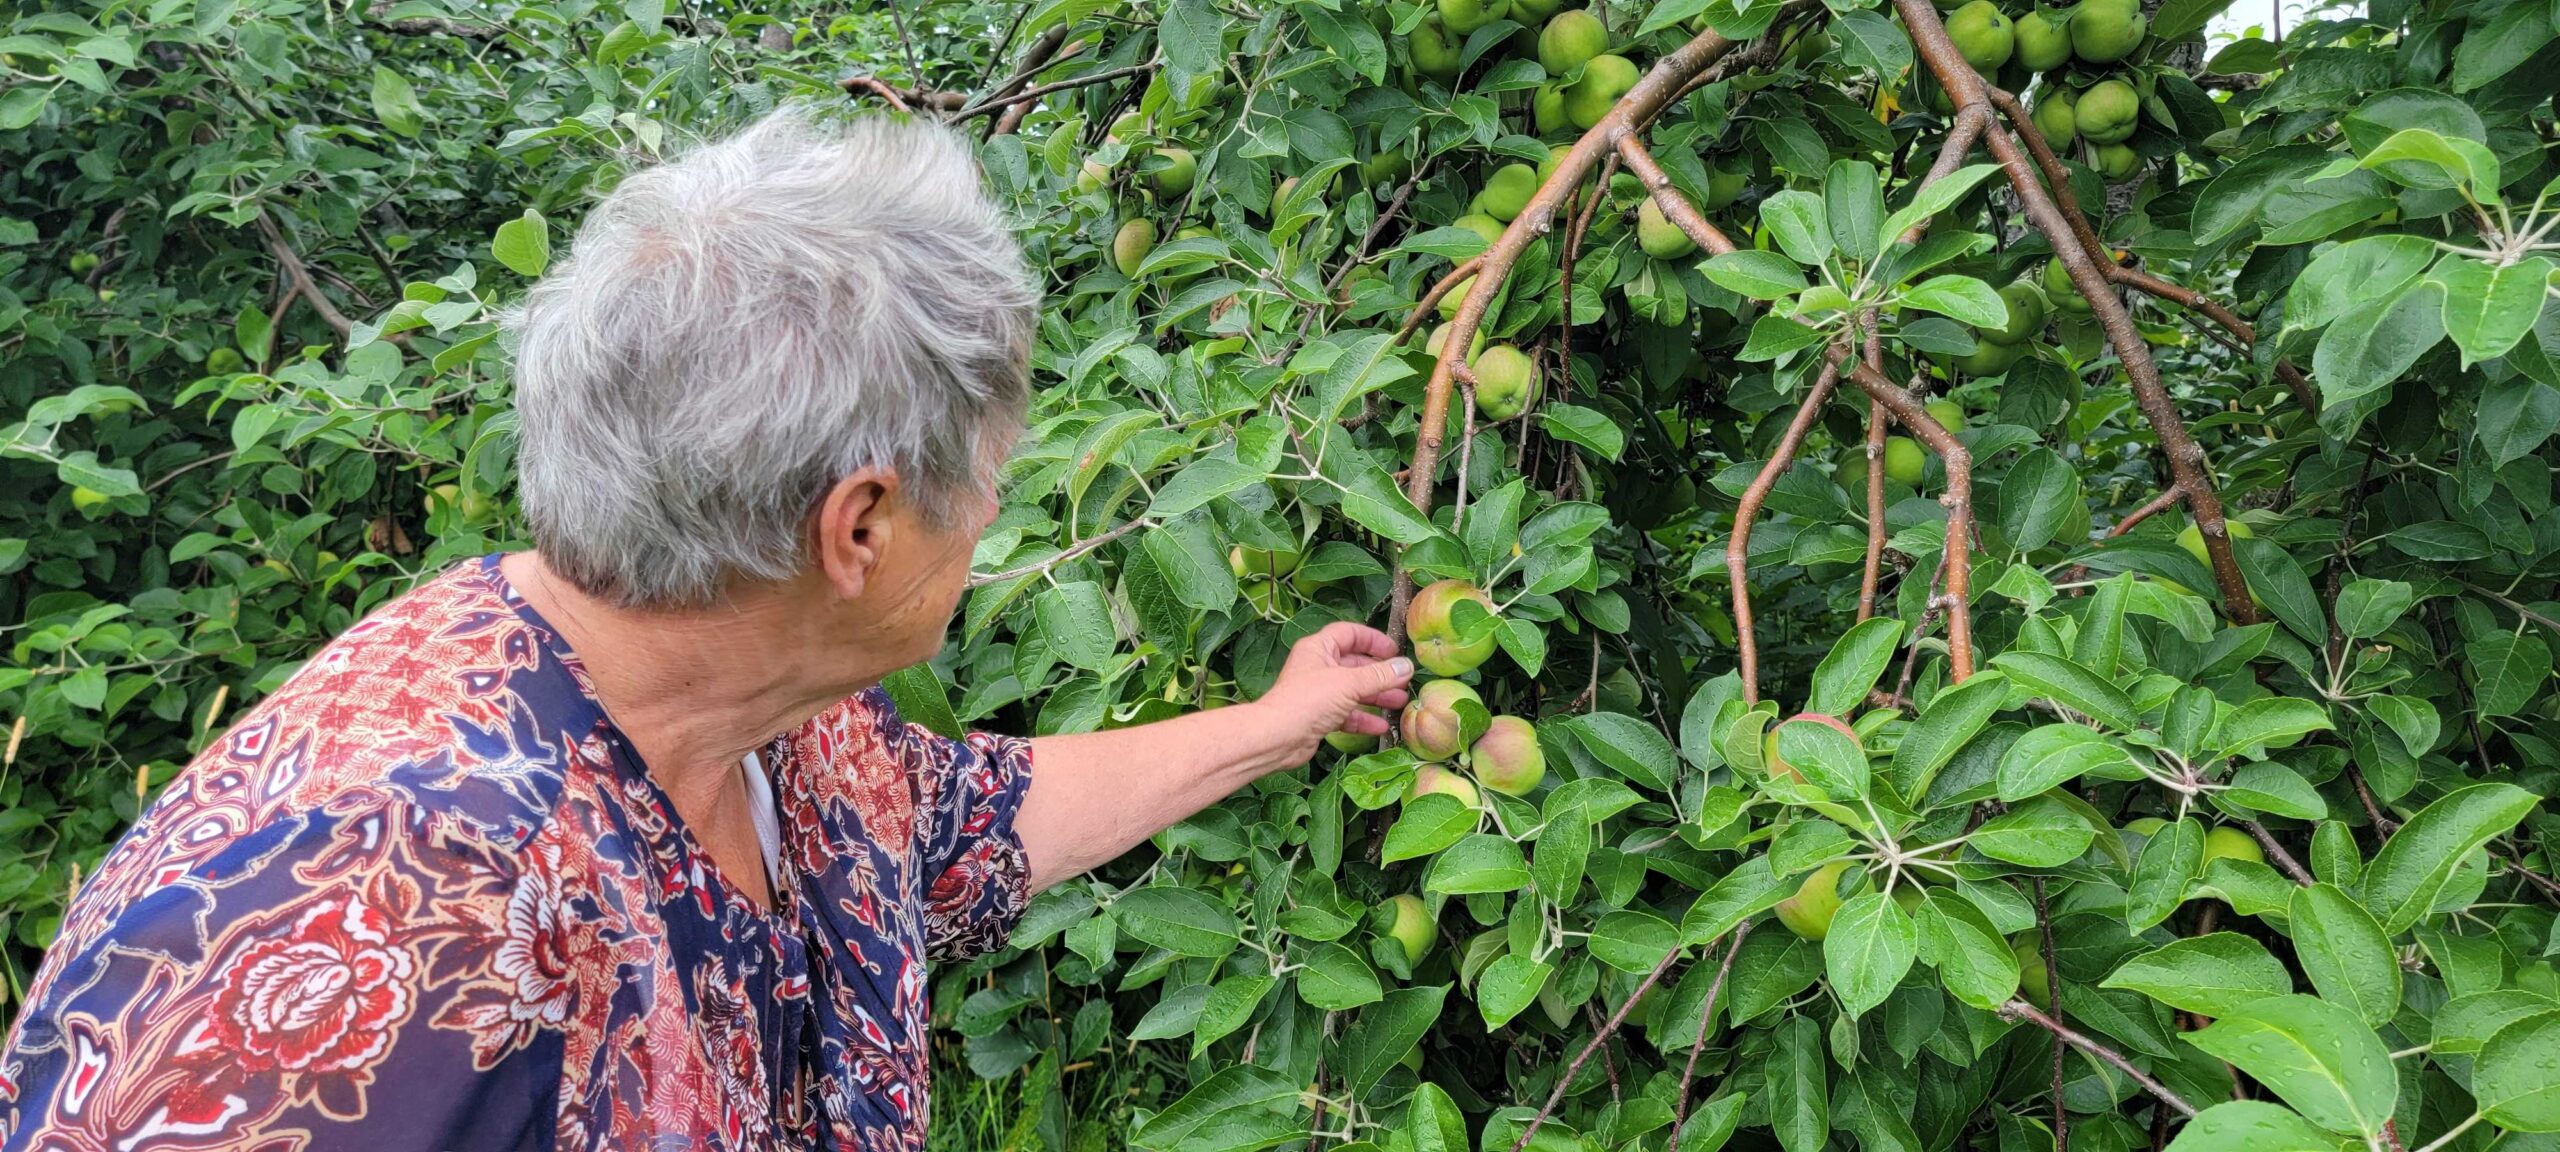 Woman picks apples from tree.